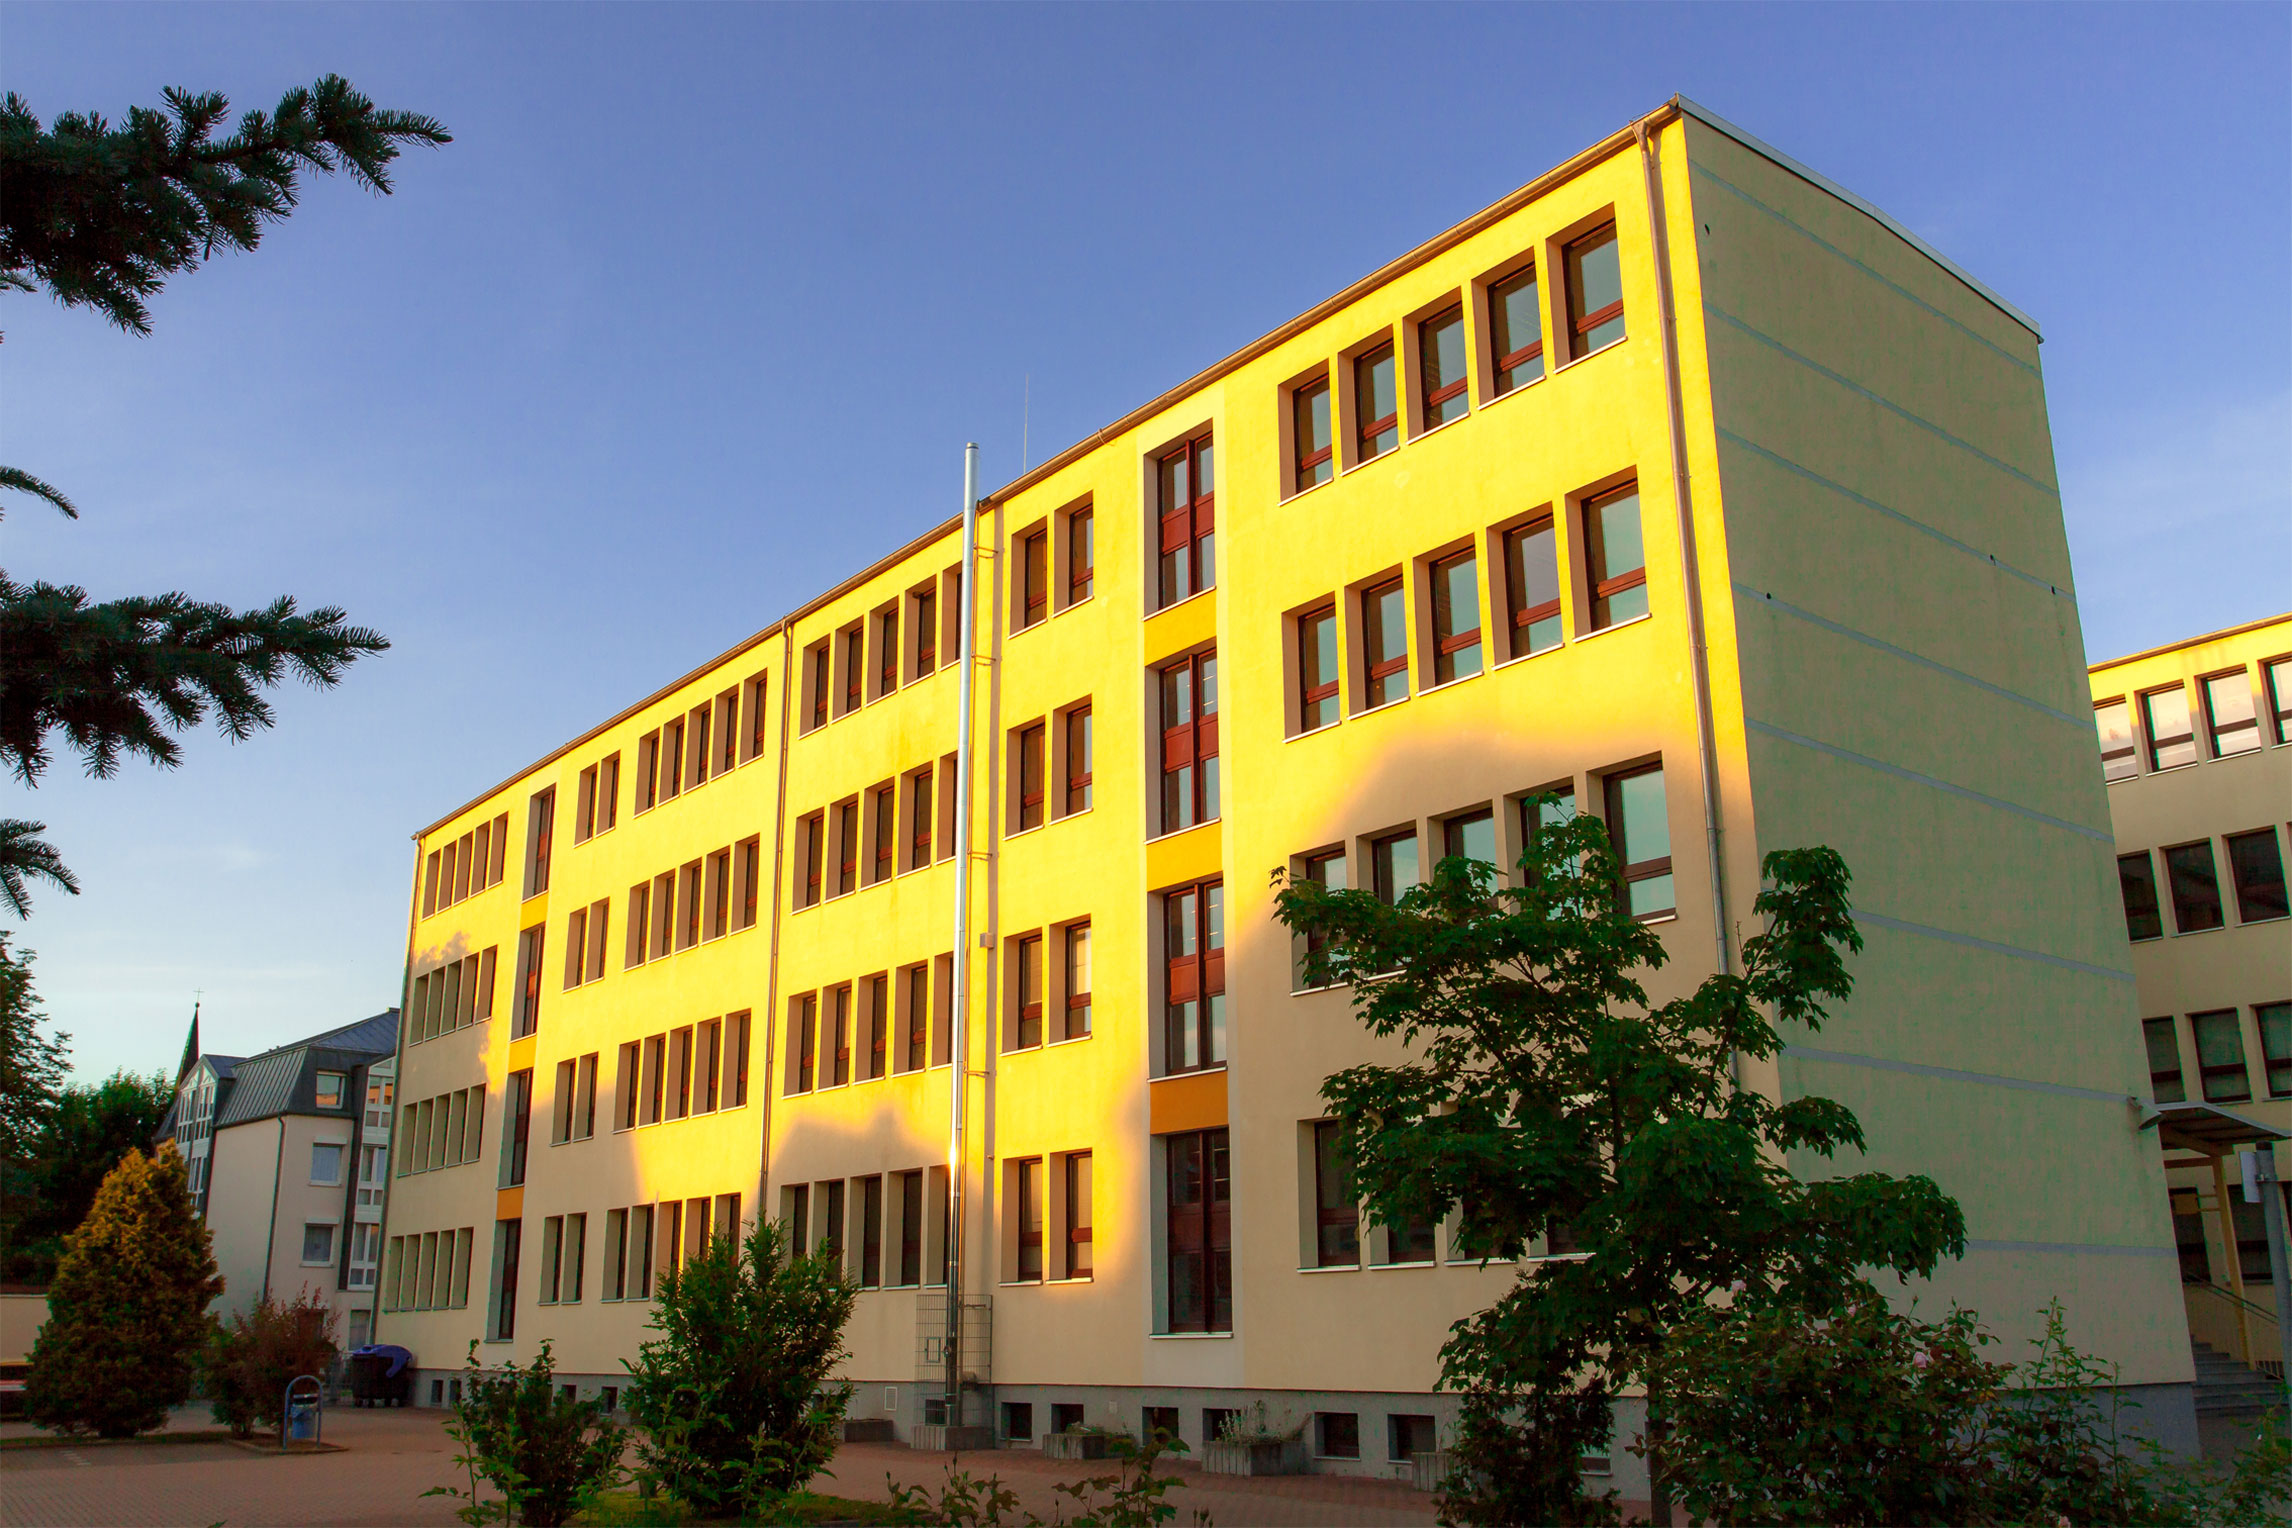 Lehrgebäude 2 im Sonnenuntergang